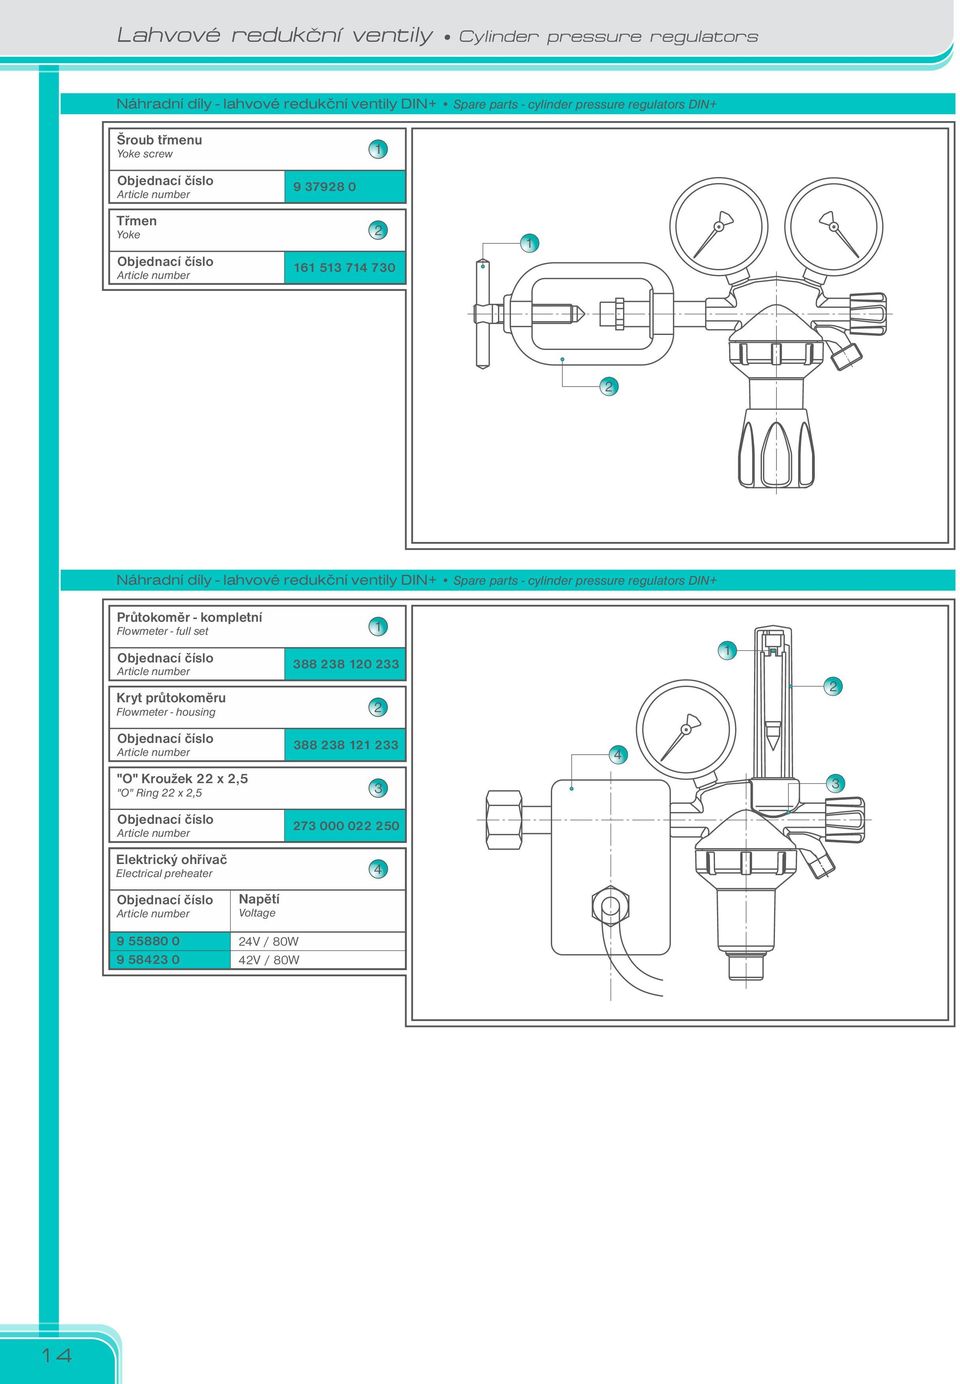 Spare parts cylinder regulators DIN+ Průtokoměr kompletní Flowmeter full set Kryt oměru Flowmeter housing 88 8 0 88 8